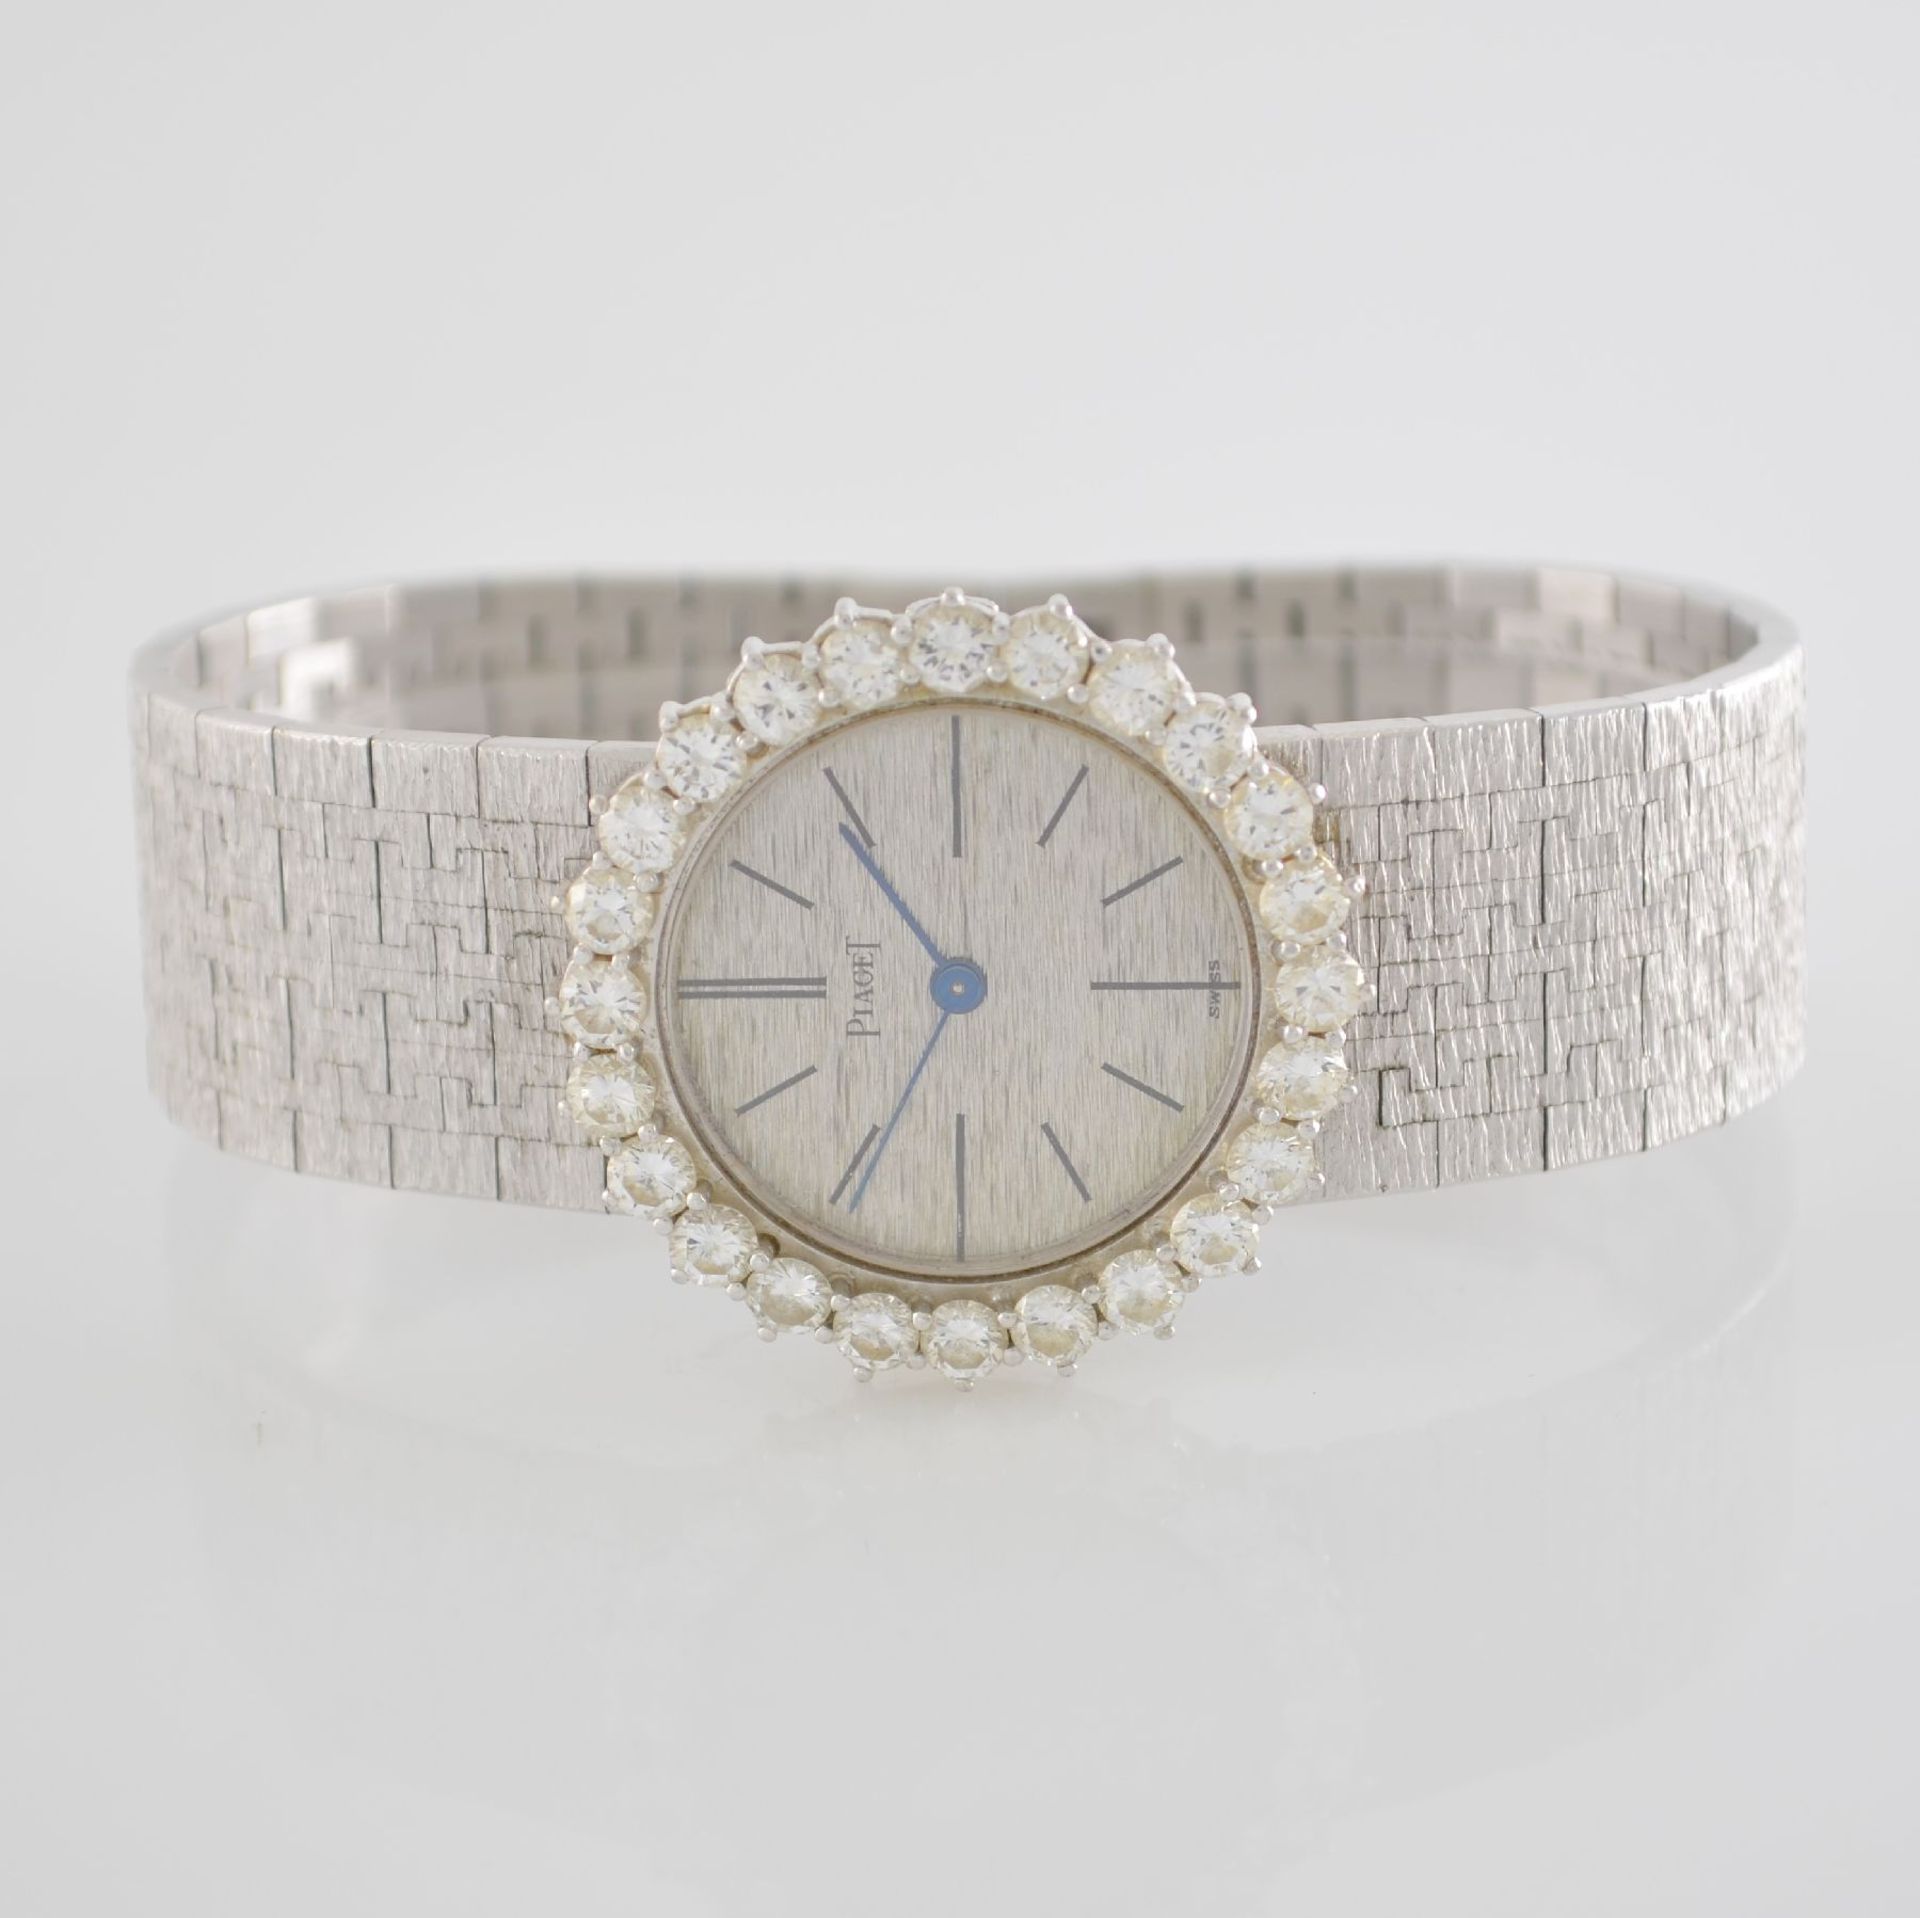 PIAGET feine Armbanduhr in WG 750/000 an Milanaiseband & Diamantlünette, Handaufzug, Schweiz